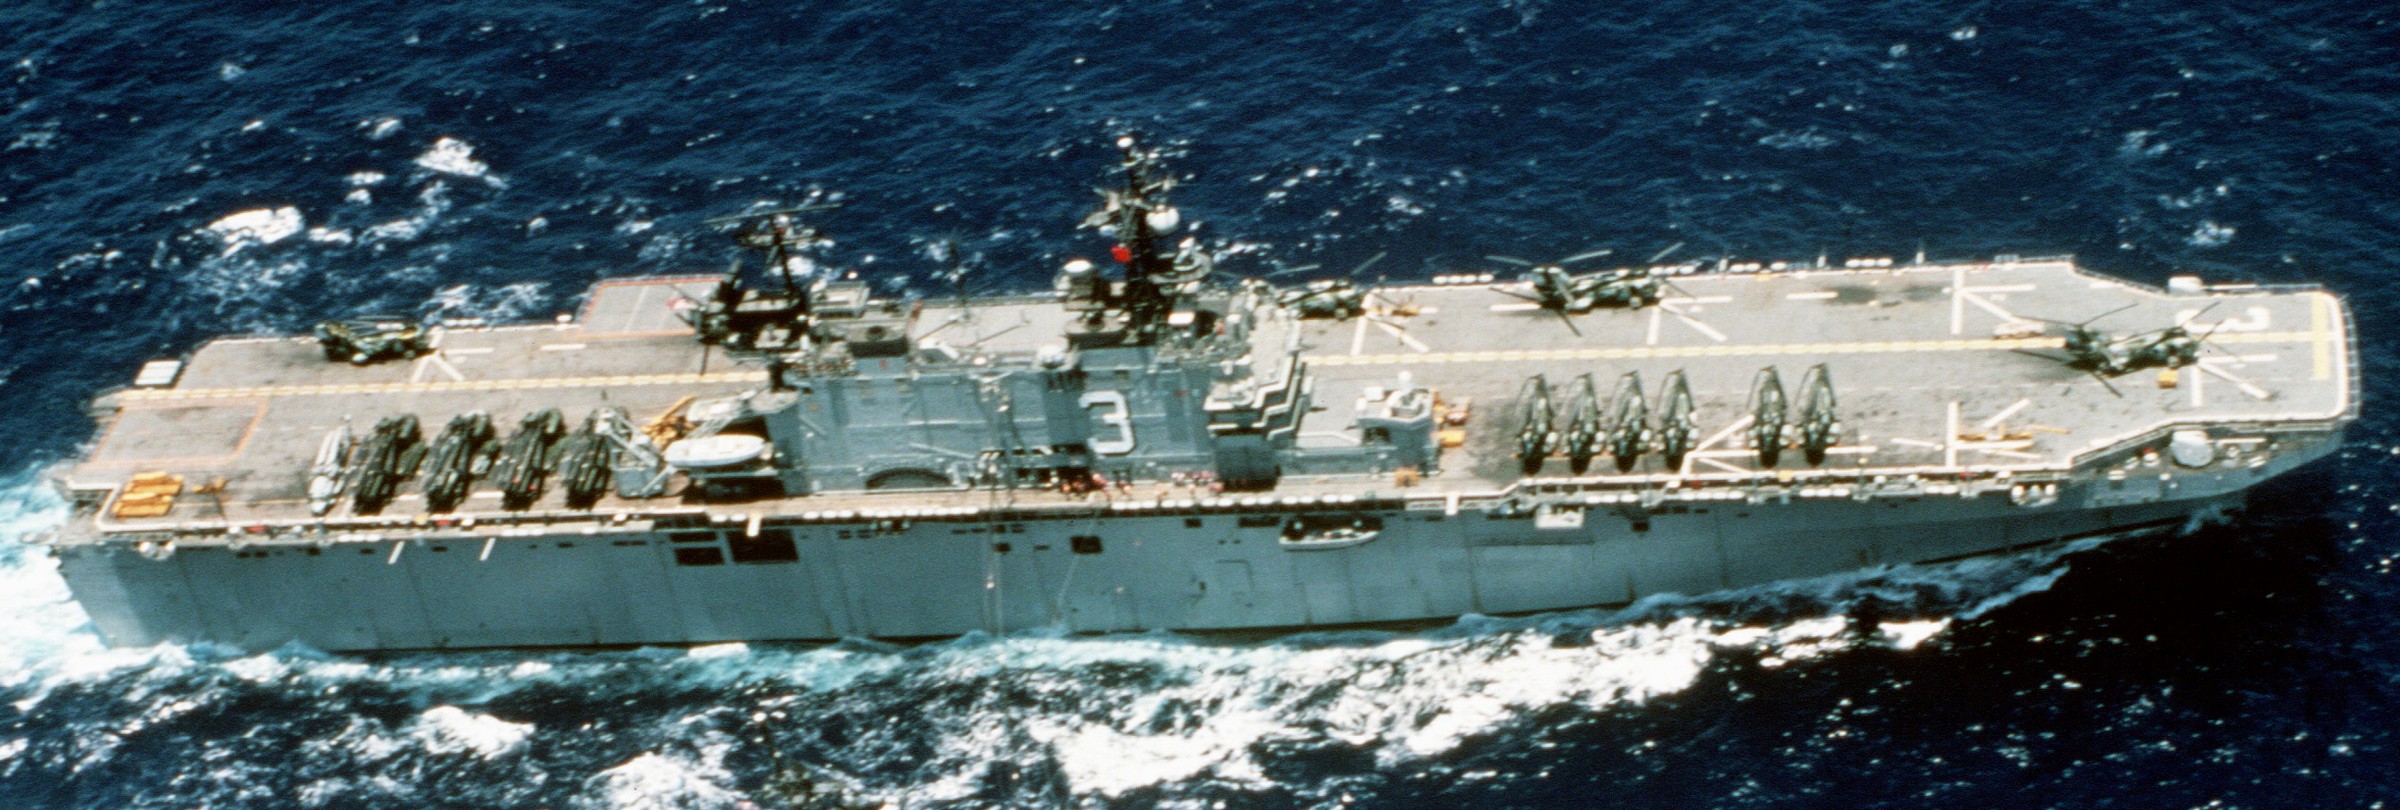 lha-3 uss belleau wood tarawa class amphibious assault ship us navy 32 exercise rimpac 1990